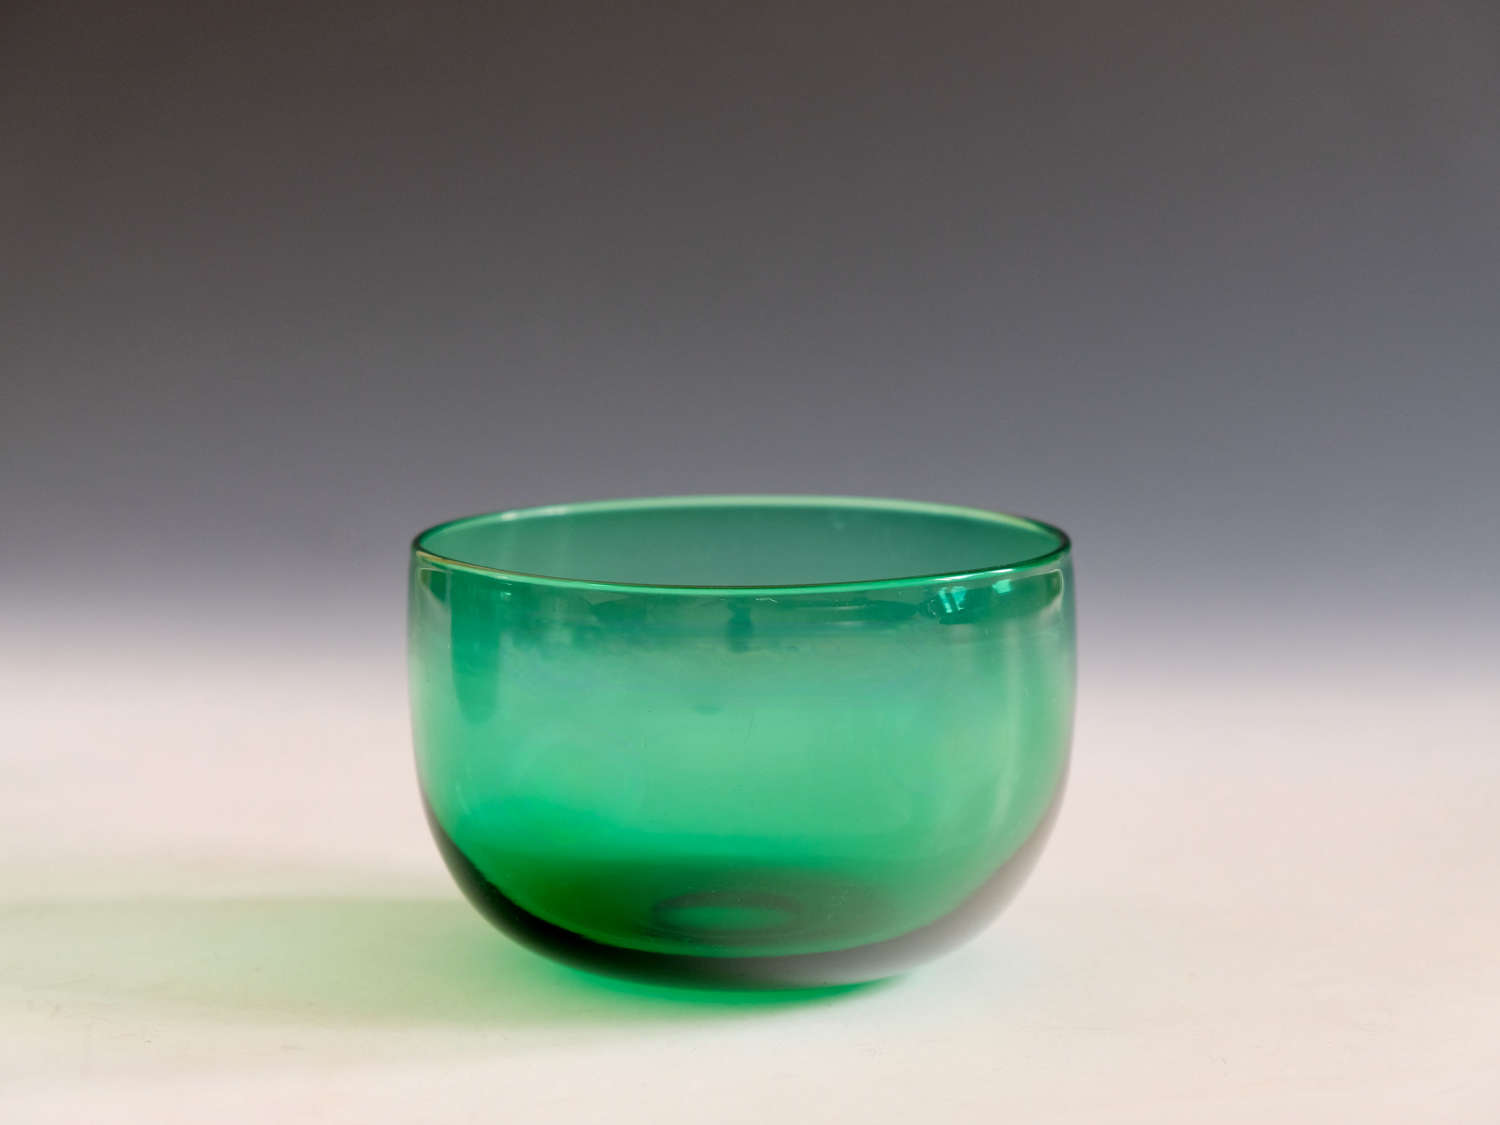 Antique glass - green finger bowl English c1840